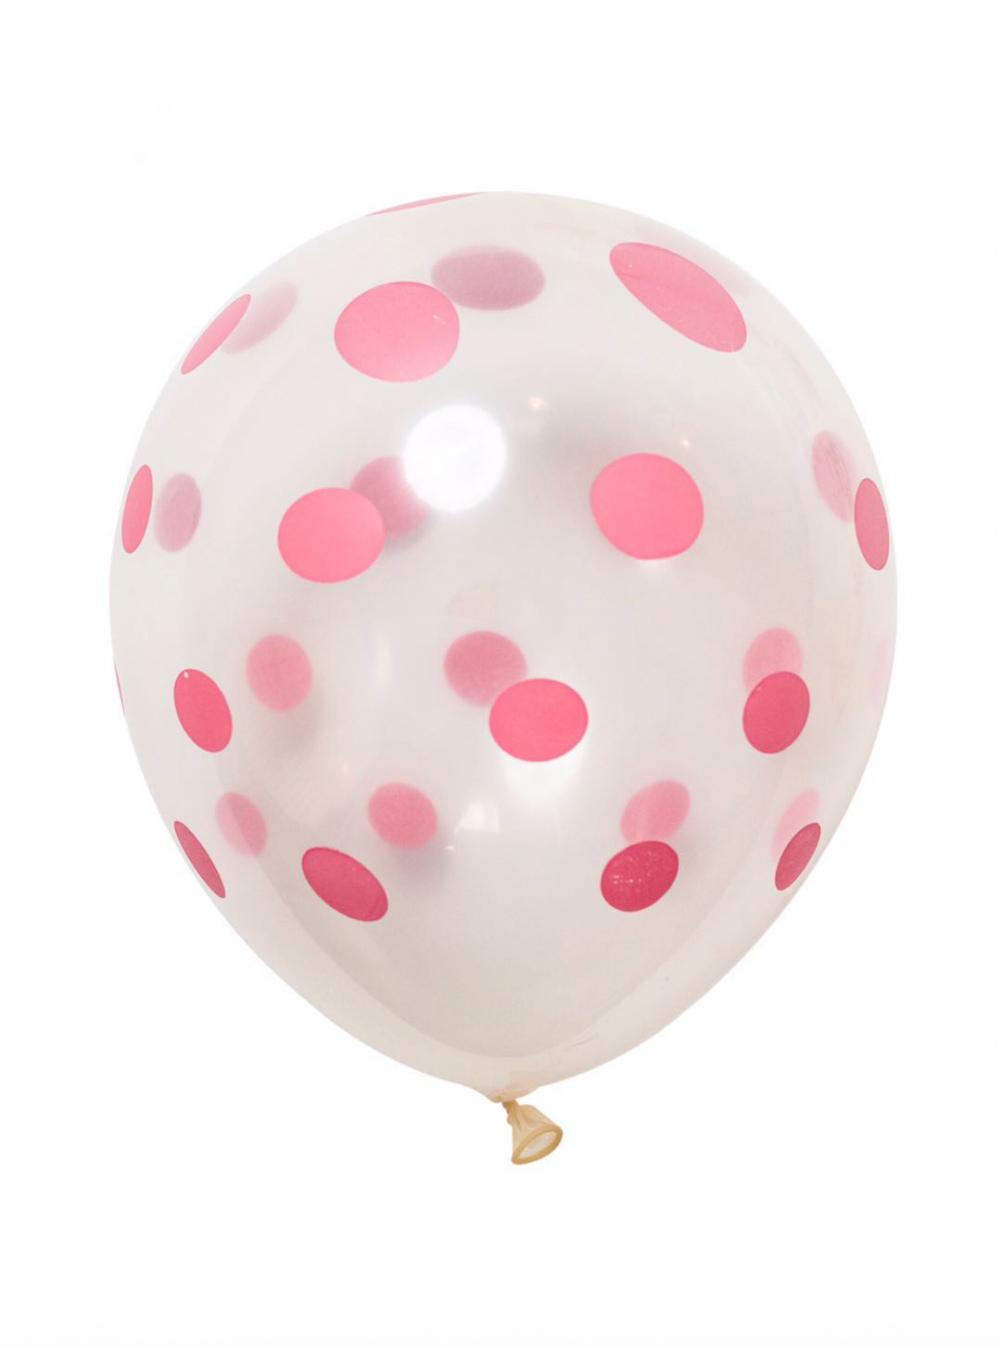 12 Inch Standard Polka Dot Balloons Clear Balloon Pink Dot (10PCS)